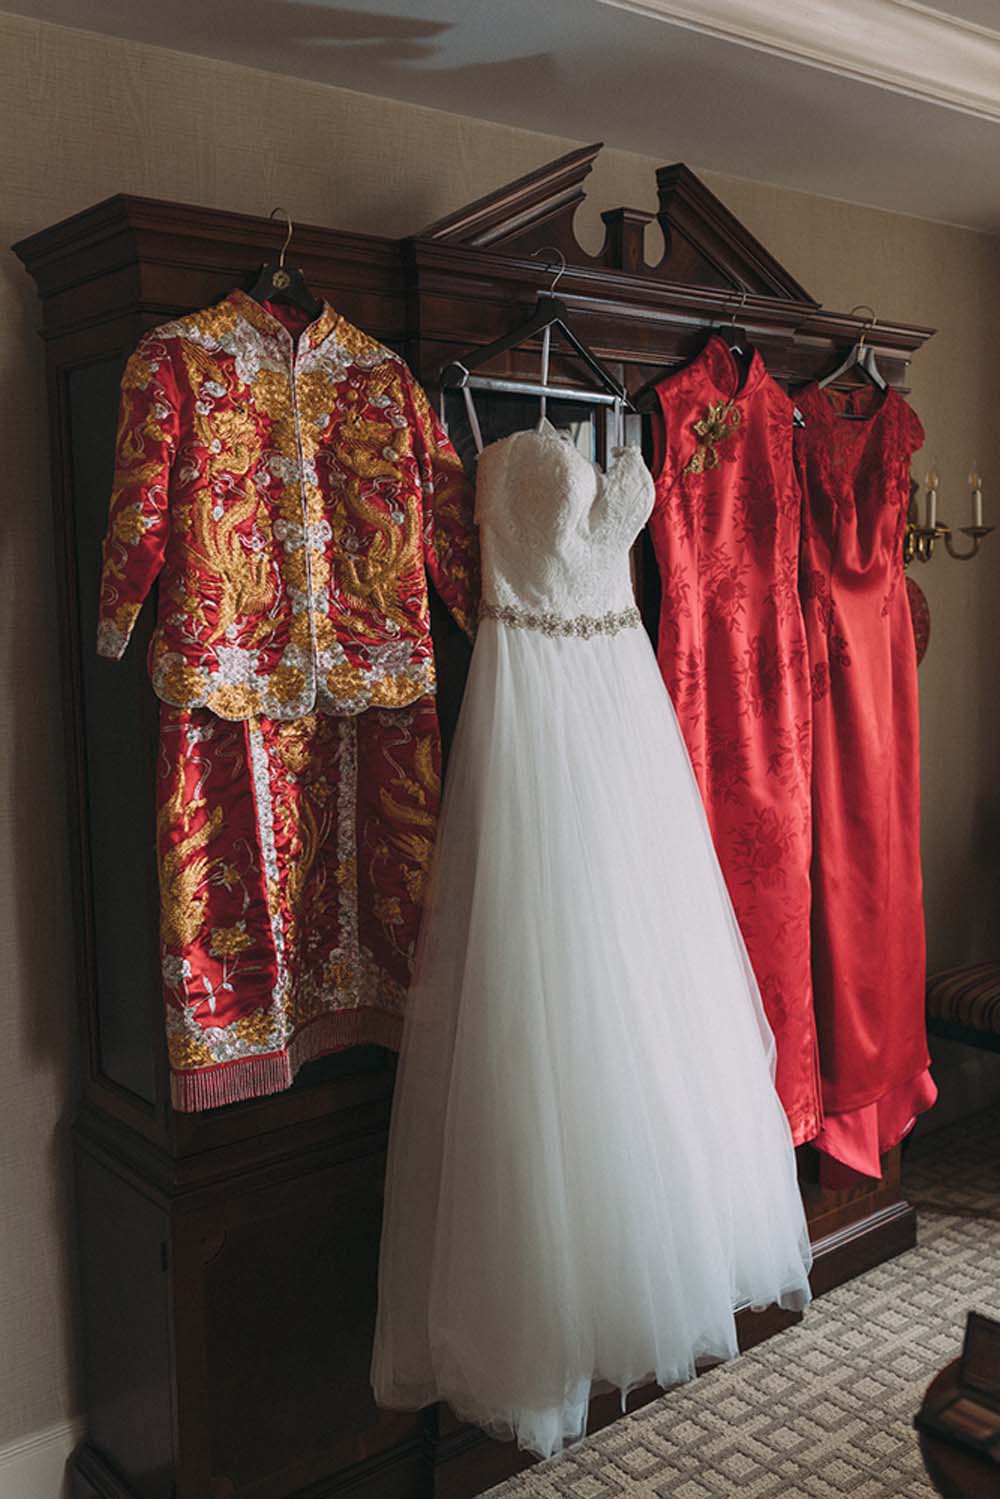 An Elegant Wedding with Cultural Elements - Dresses